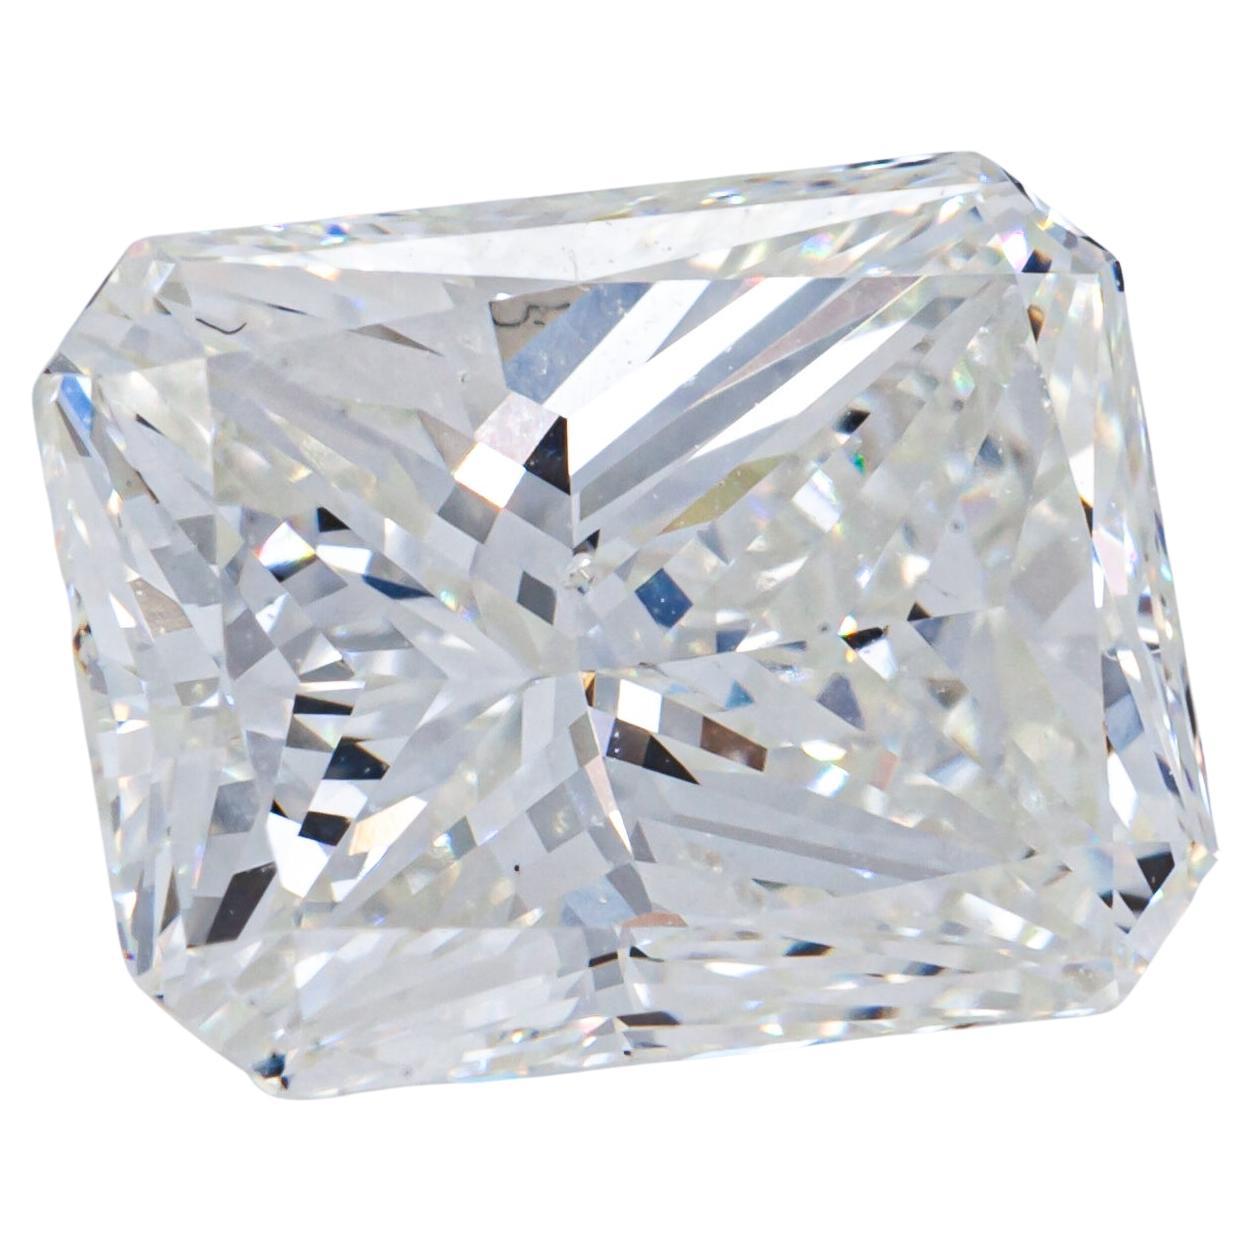 Diamant taille radiant de 2,07 carats non serti H/SI1 certifié GIA